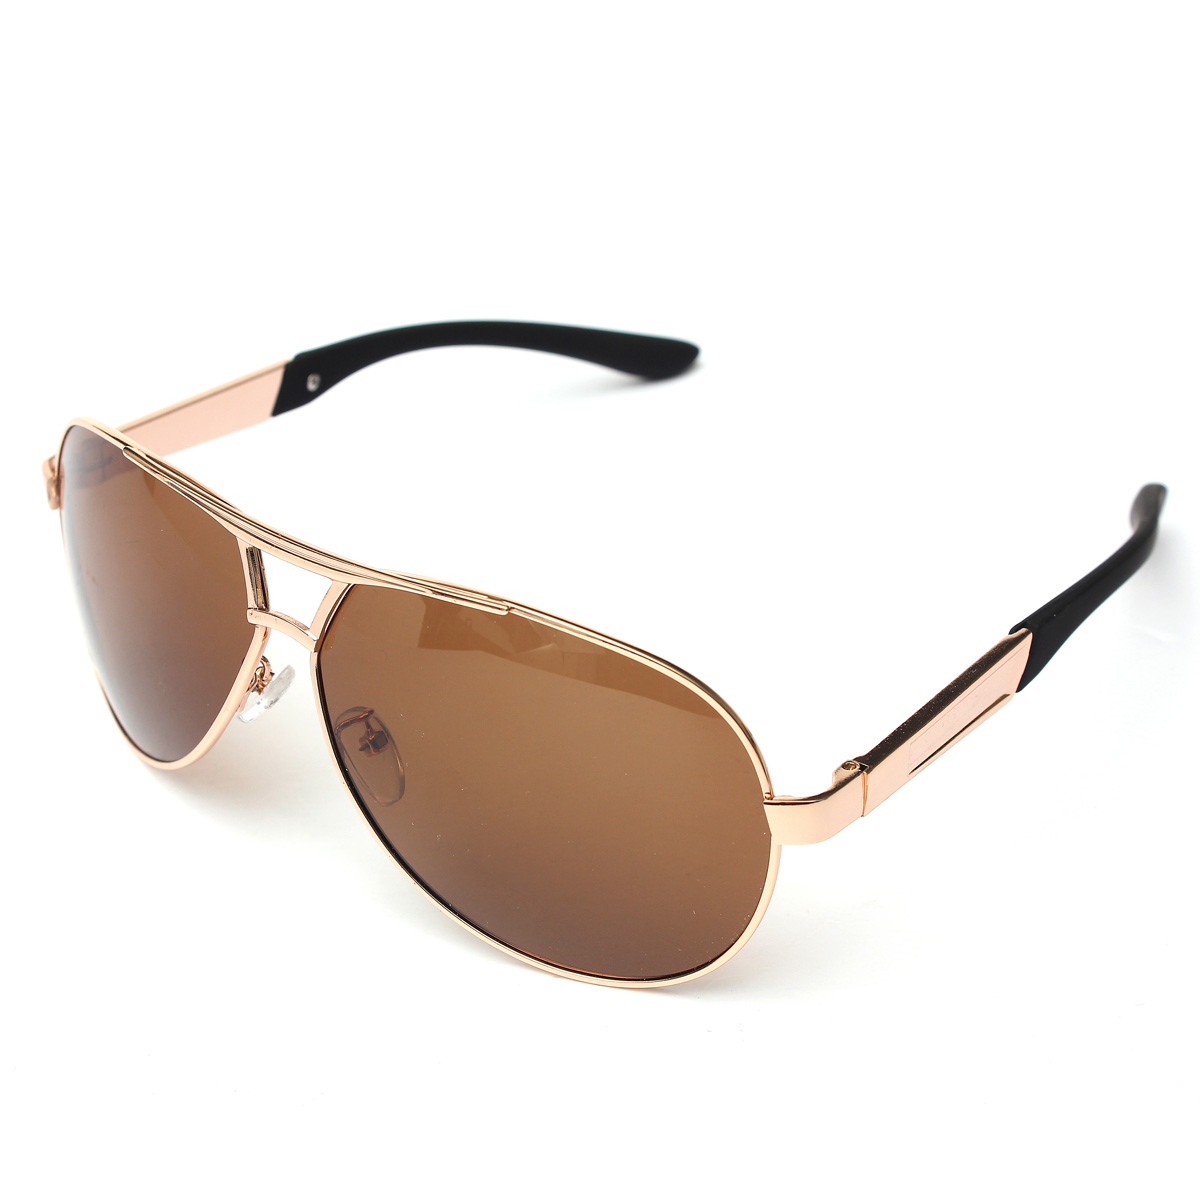 Mens-Gold-Polarized-Sunglasses-Driving-Eyewear-Glasses-Outdoor-Sport-1407871